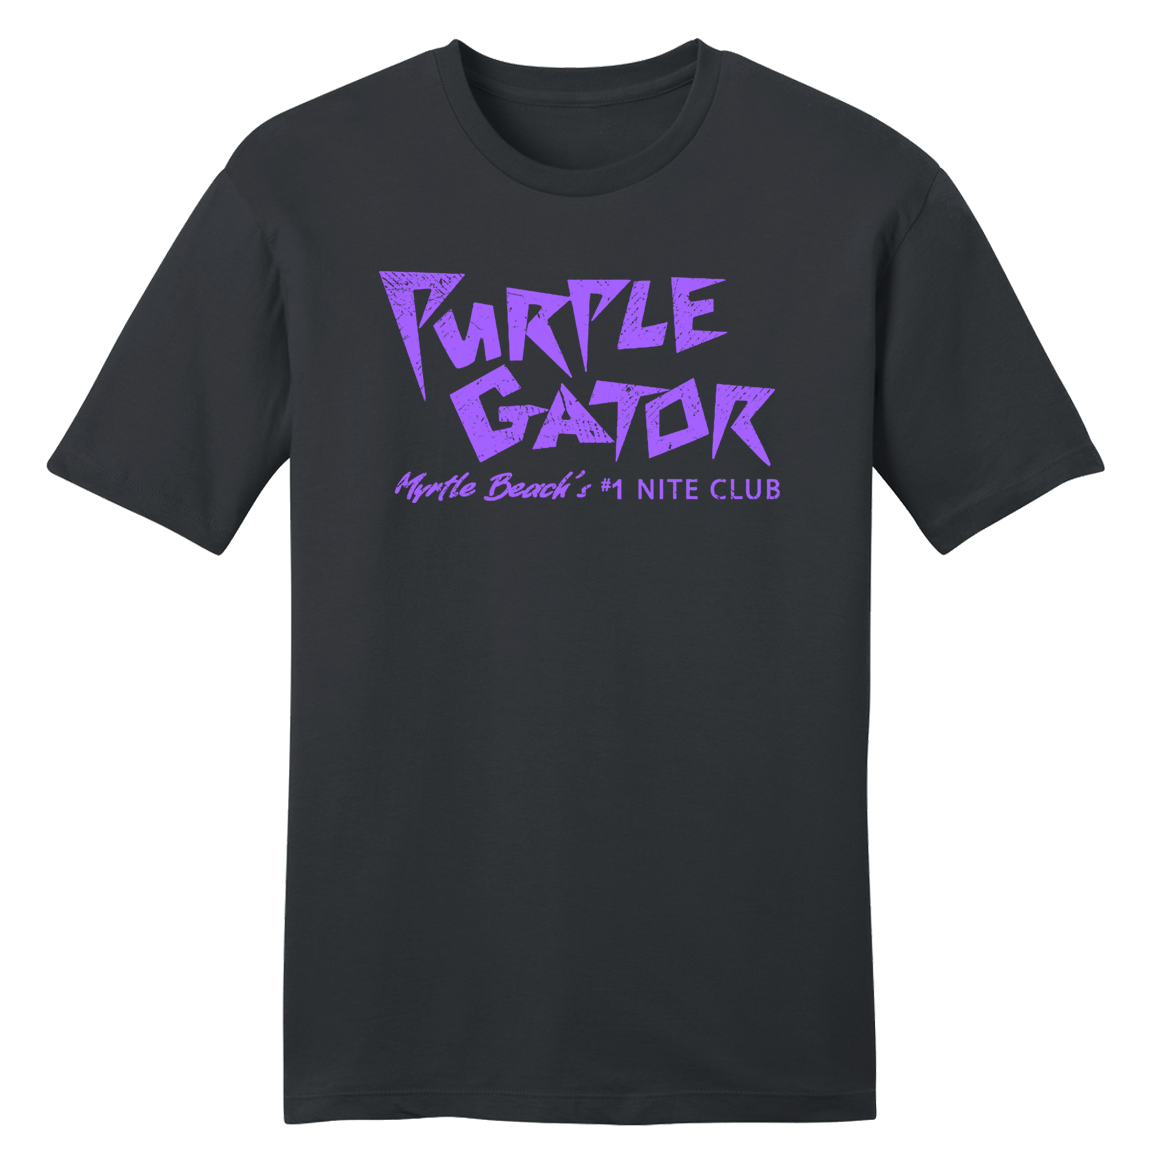 The Purple Gator